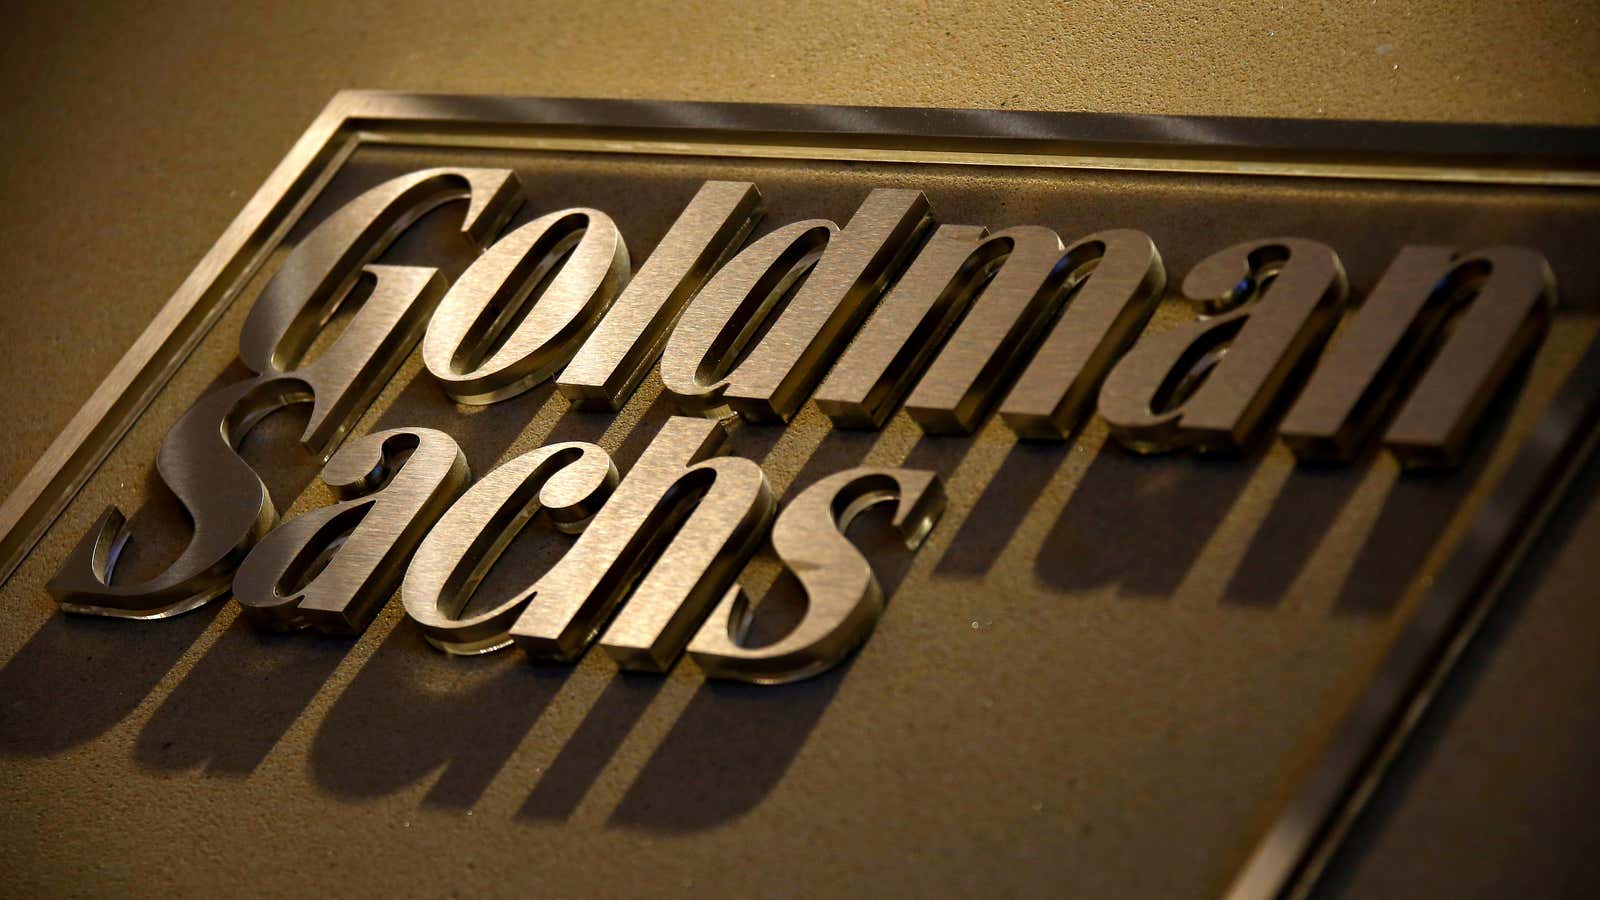 Goldman has a long way to go.